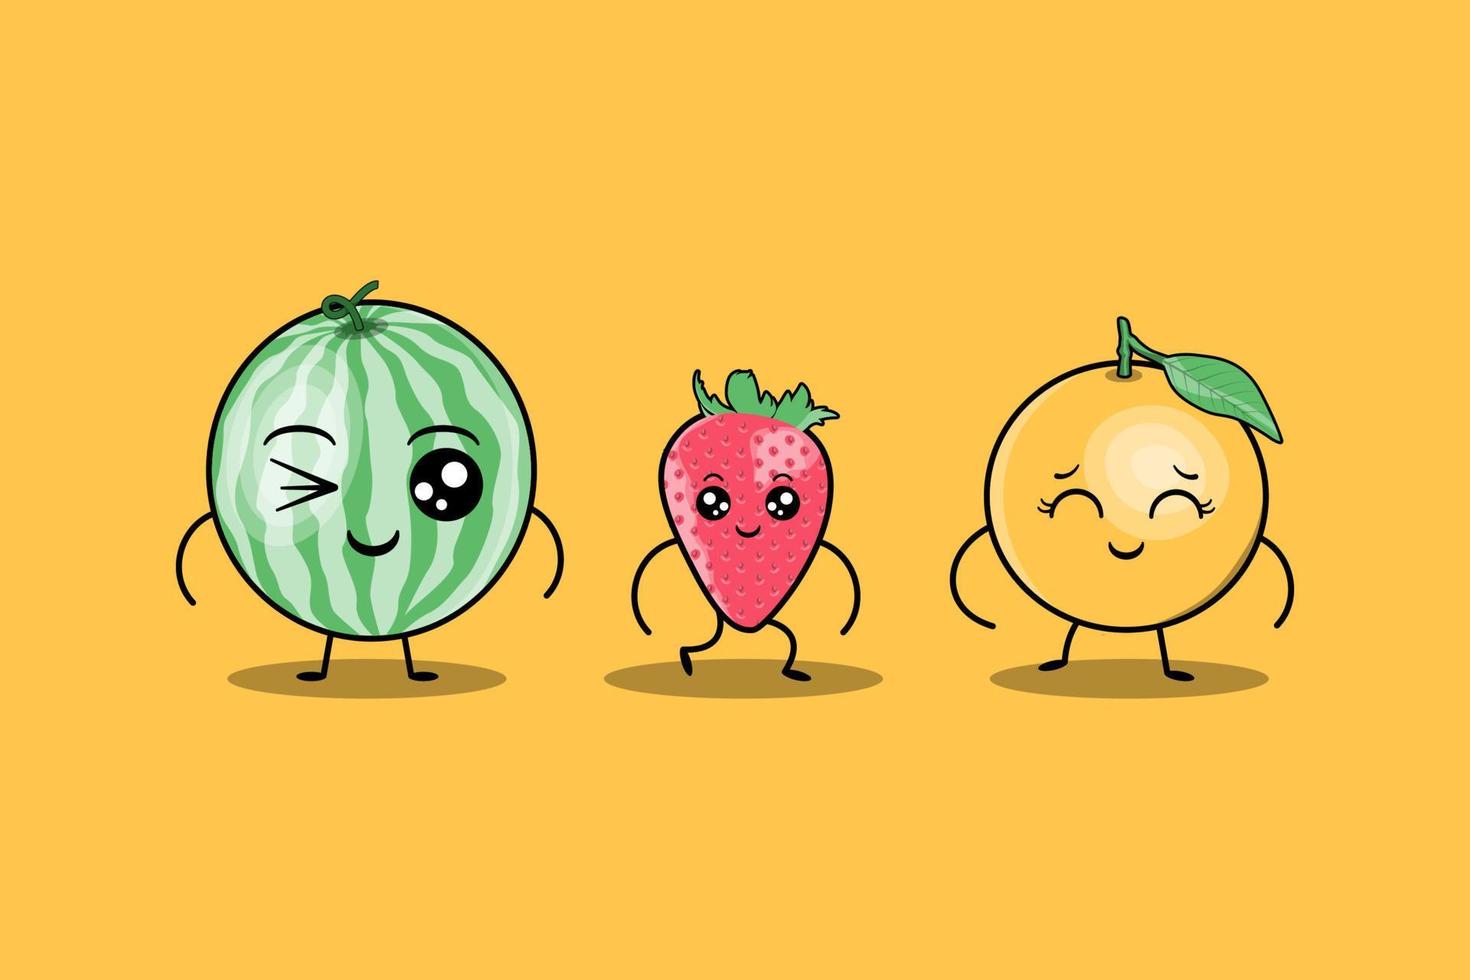 cute colorfull kawaii fruits cartoon characters vector set with many expression